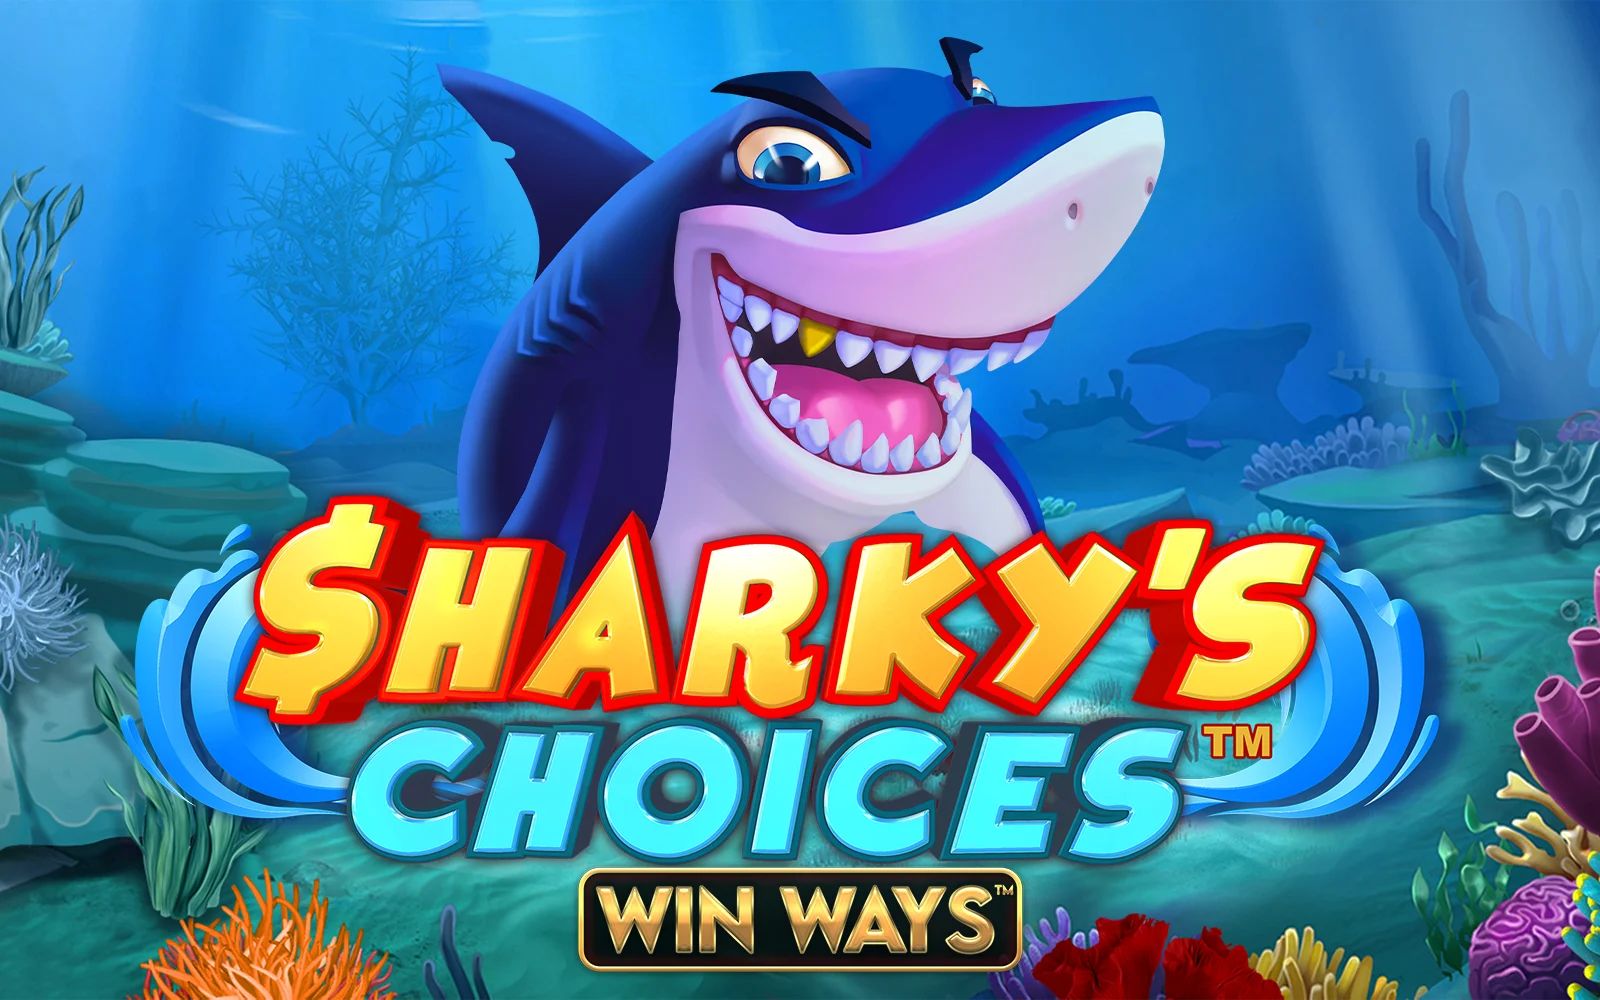 Play Sharky’s Choices Win Ways™ on Starcasino.be online casino